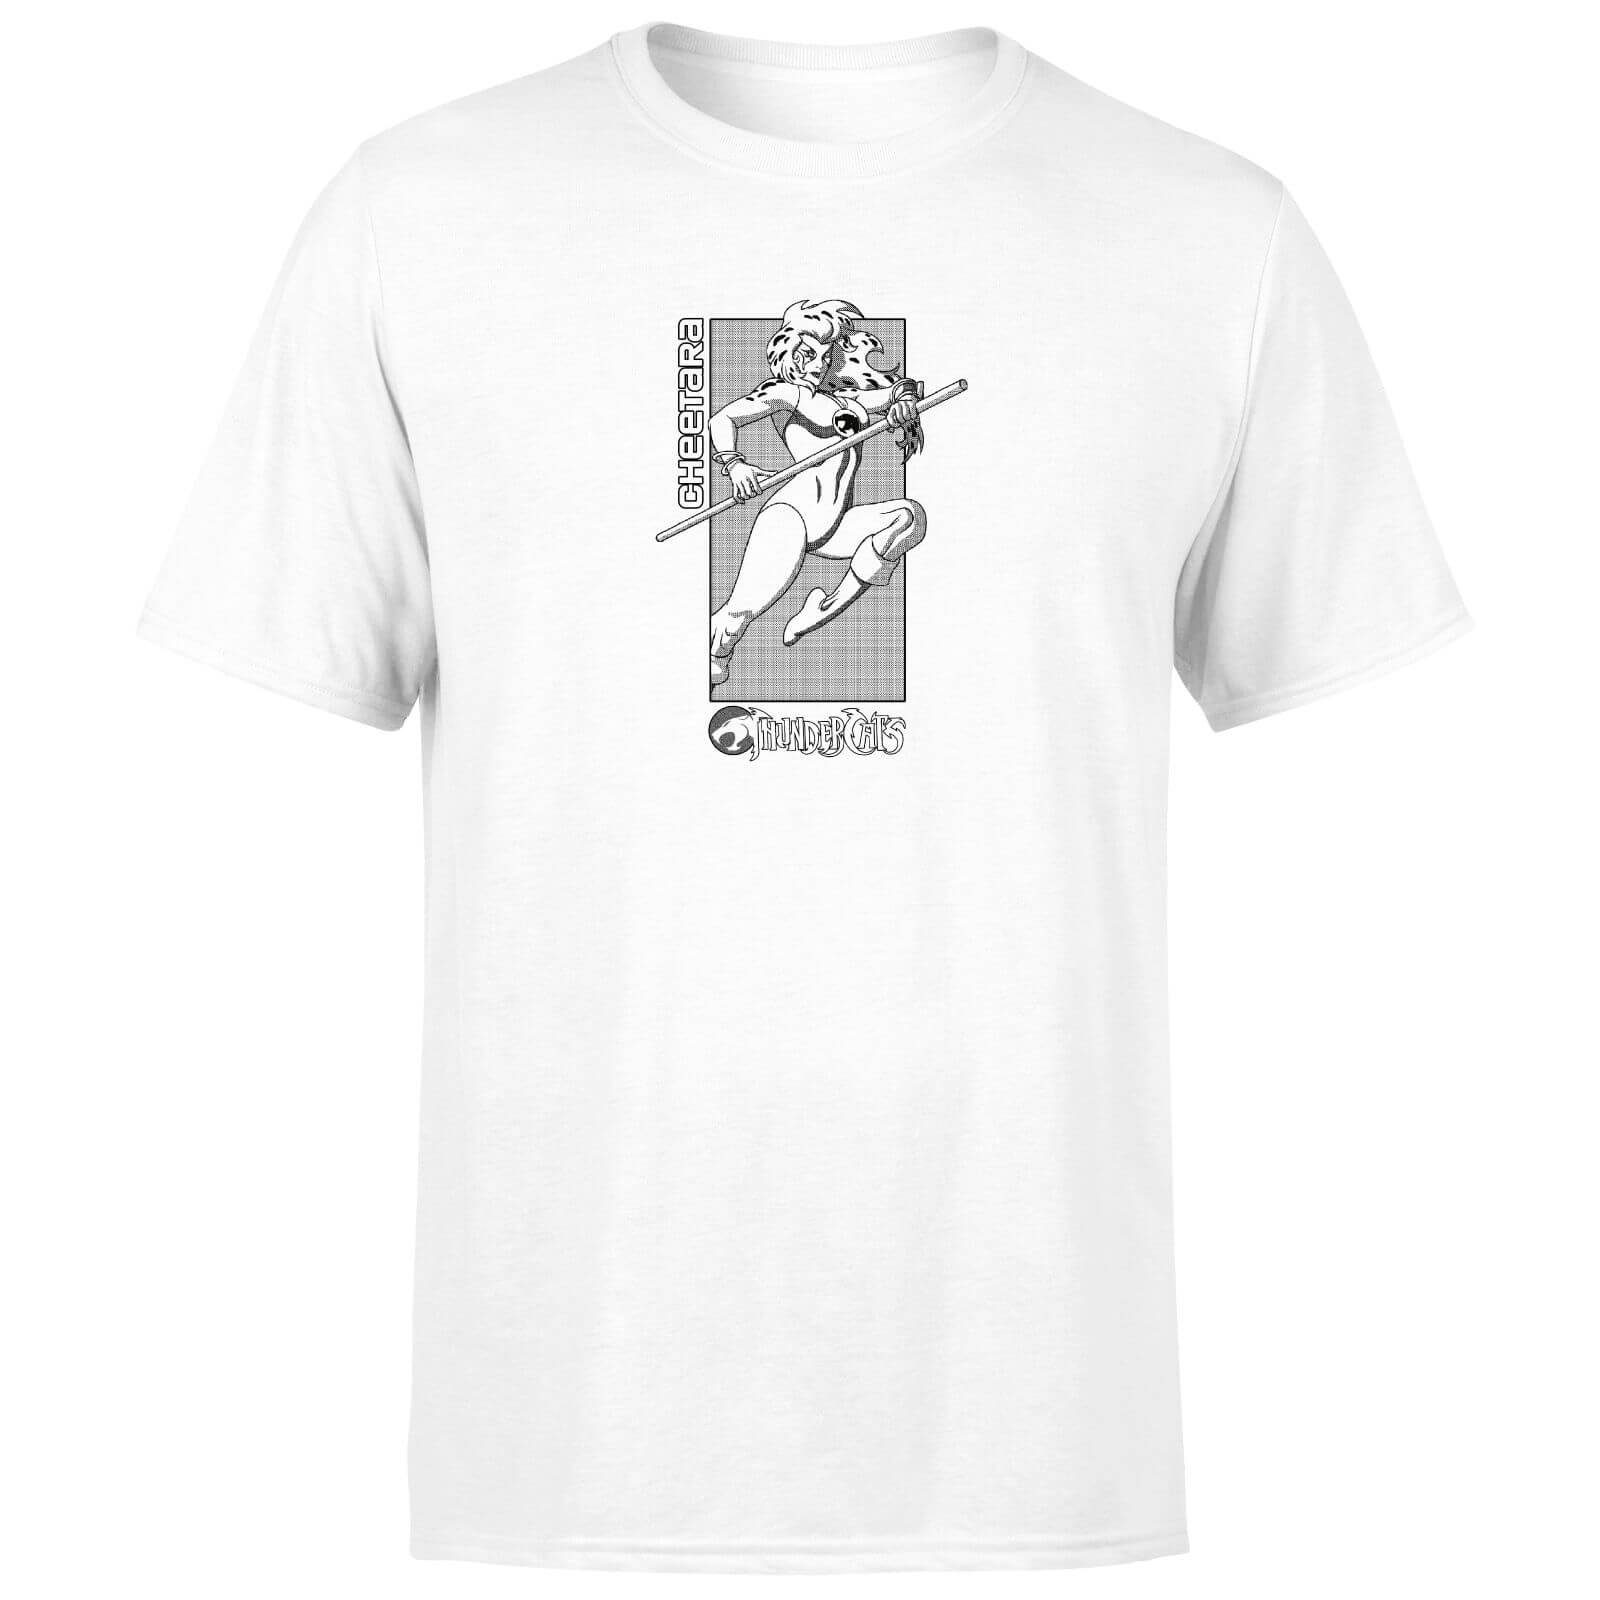 Thundercats Cheetara Unisex T-Shirt - White - 5XL - White